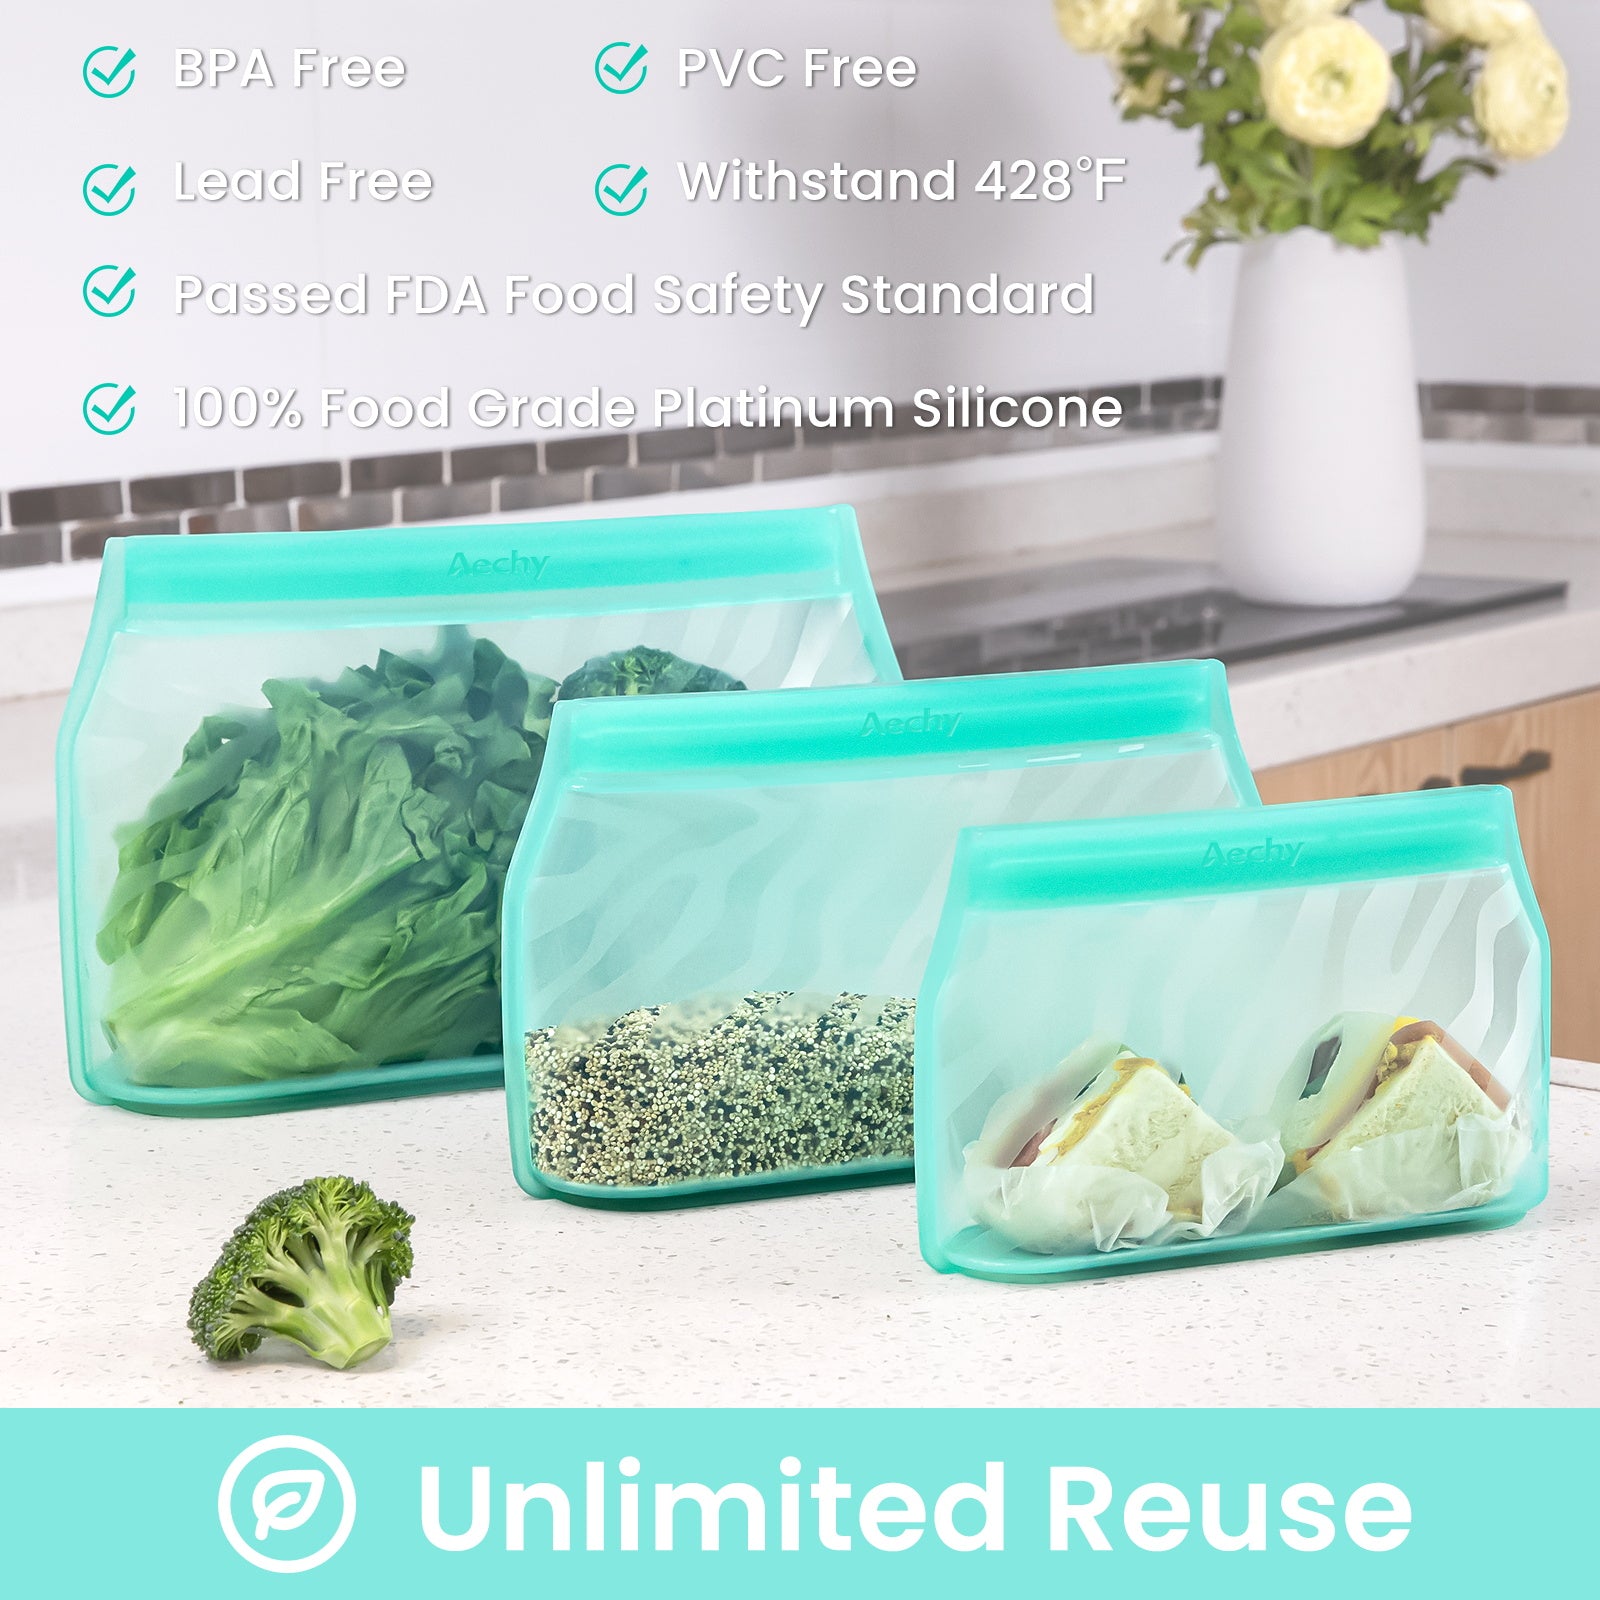 Reusable Silicone Food Storage Bag Set of 3 - Large Size 50 oz - Airtight Zip